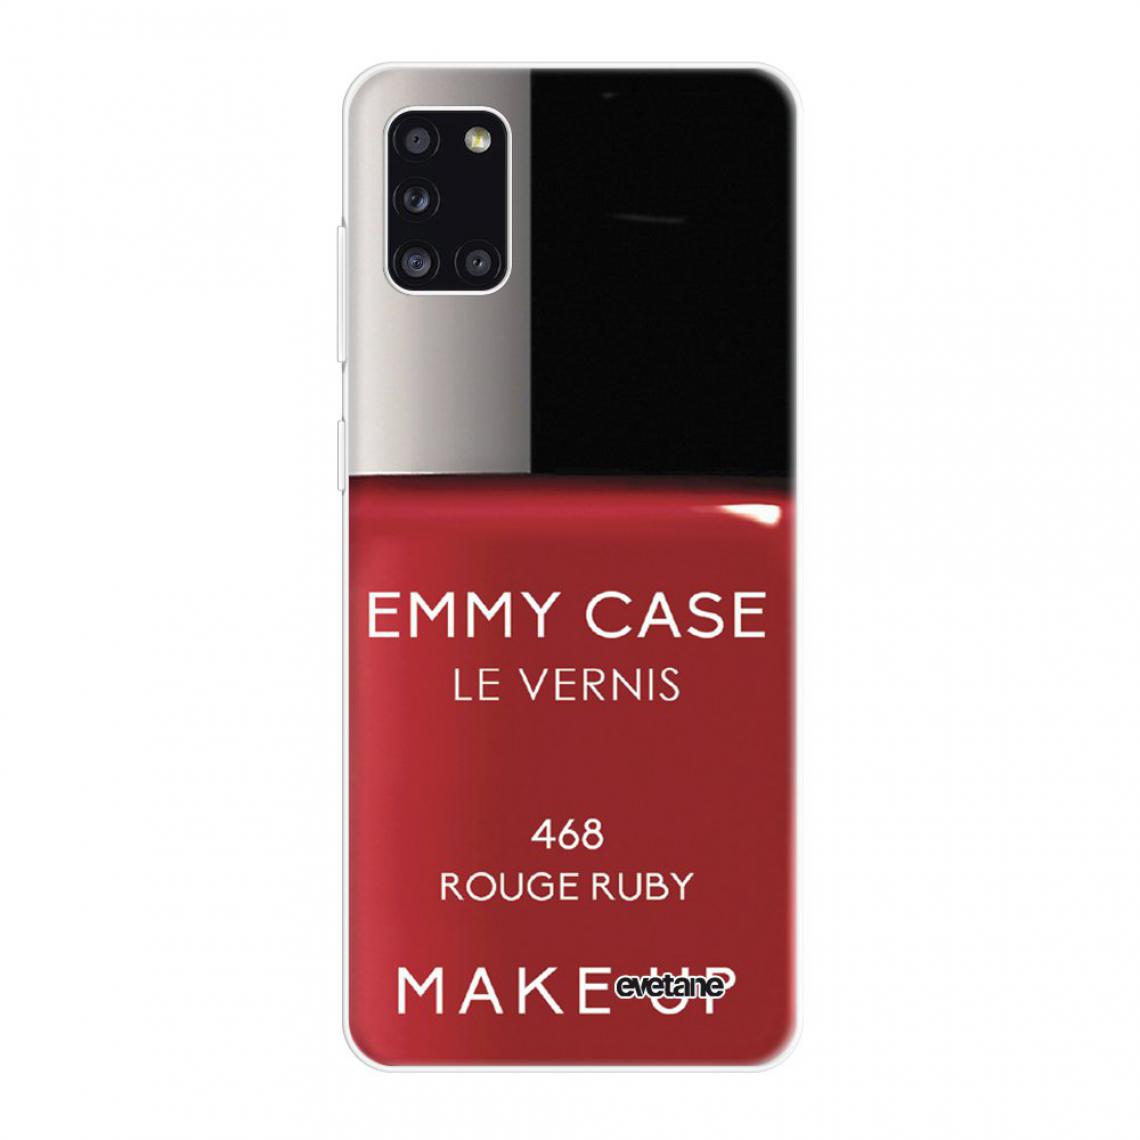 Evetane - Coque Samsung Galaxy A31 360 intégrale avant arrière transparente - Coque, étui smartphone